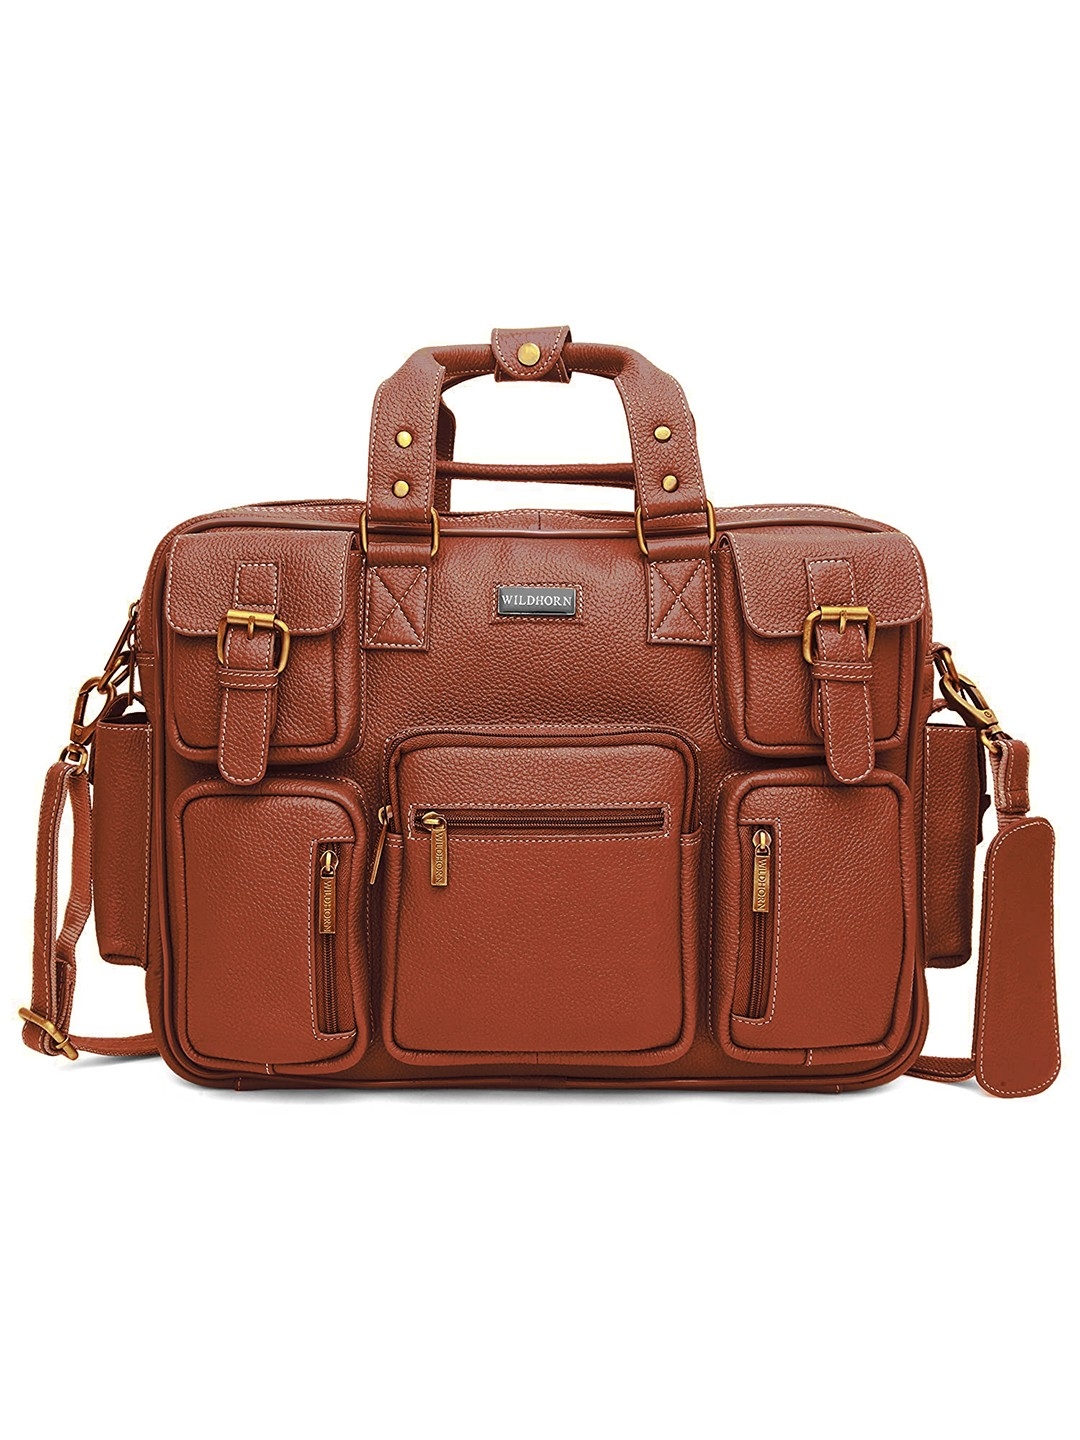 WildHorn | WildHorn Tan Leather Laptop Messenger Bag for Men| Padded Laptop Compartment |Office Bag 